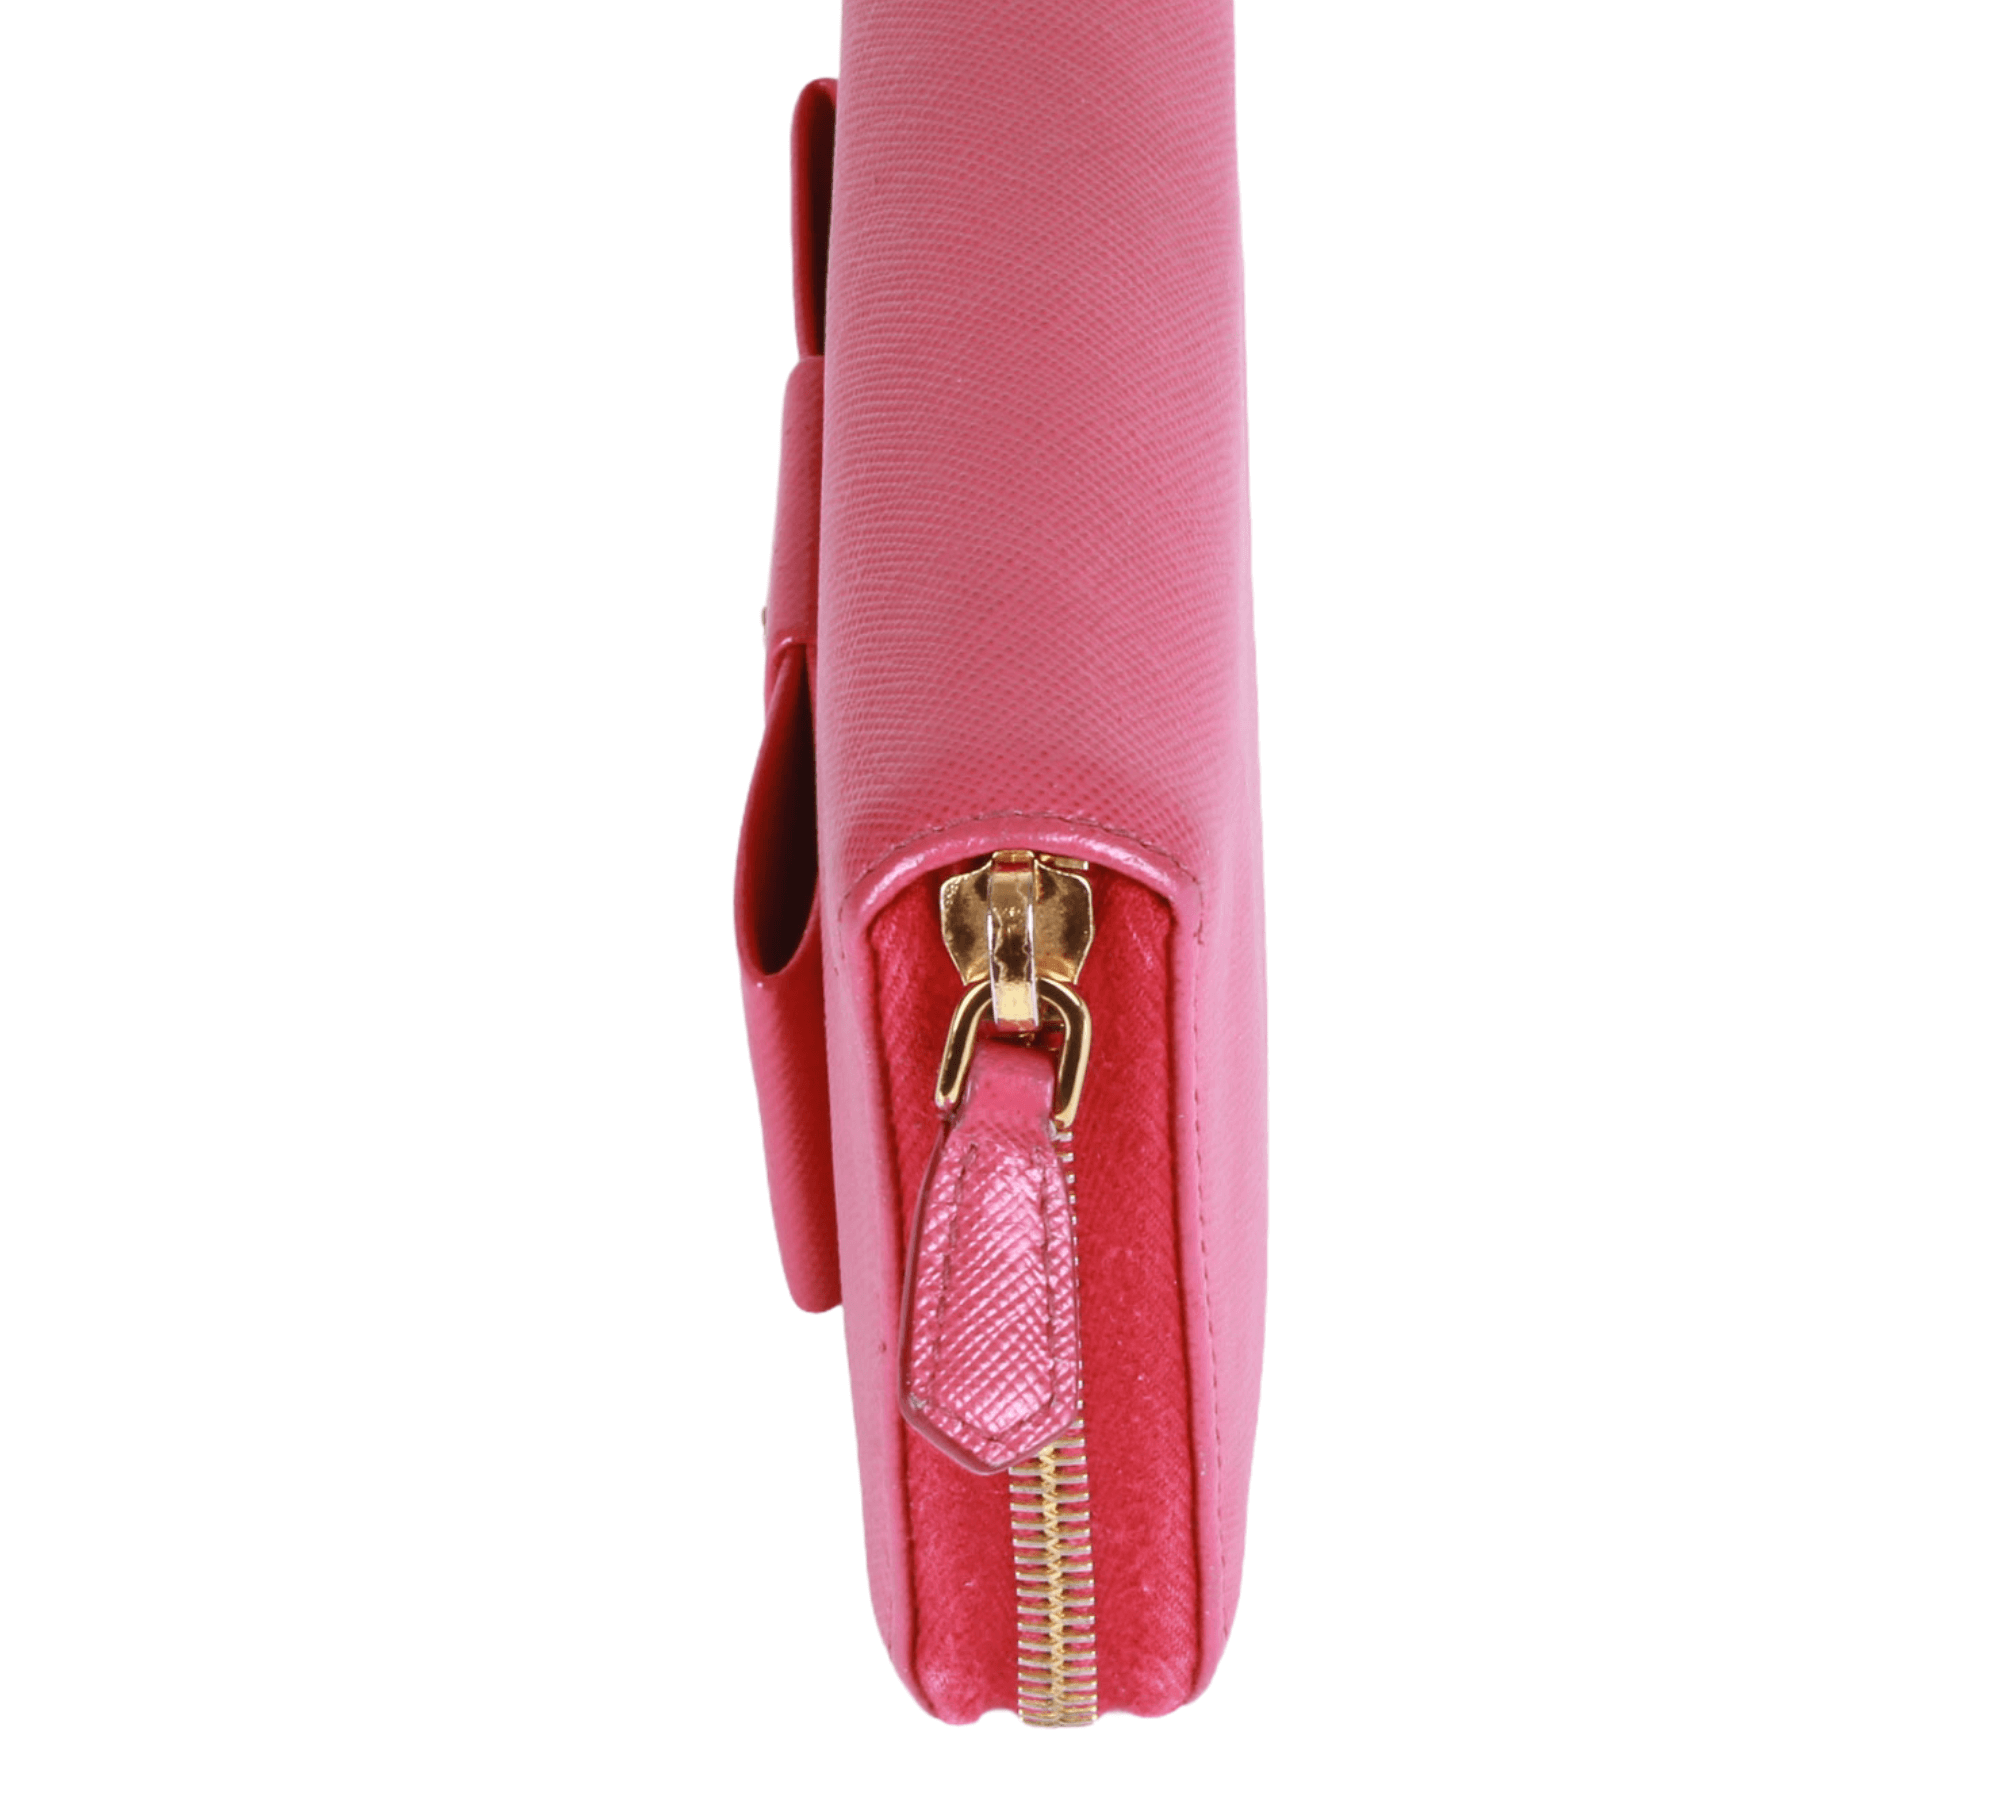 Prada Saffiano Leather Bow Continental Flap Wallet Pink Peonia | eBay